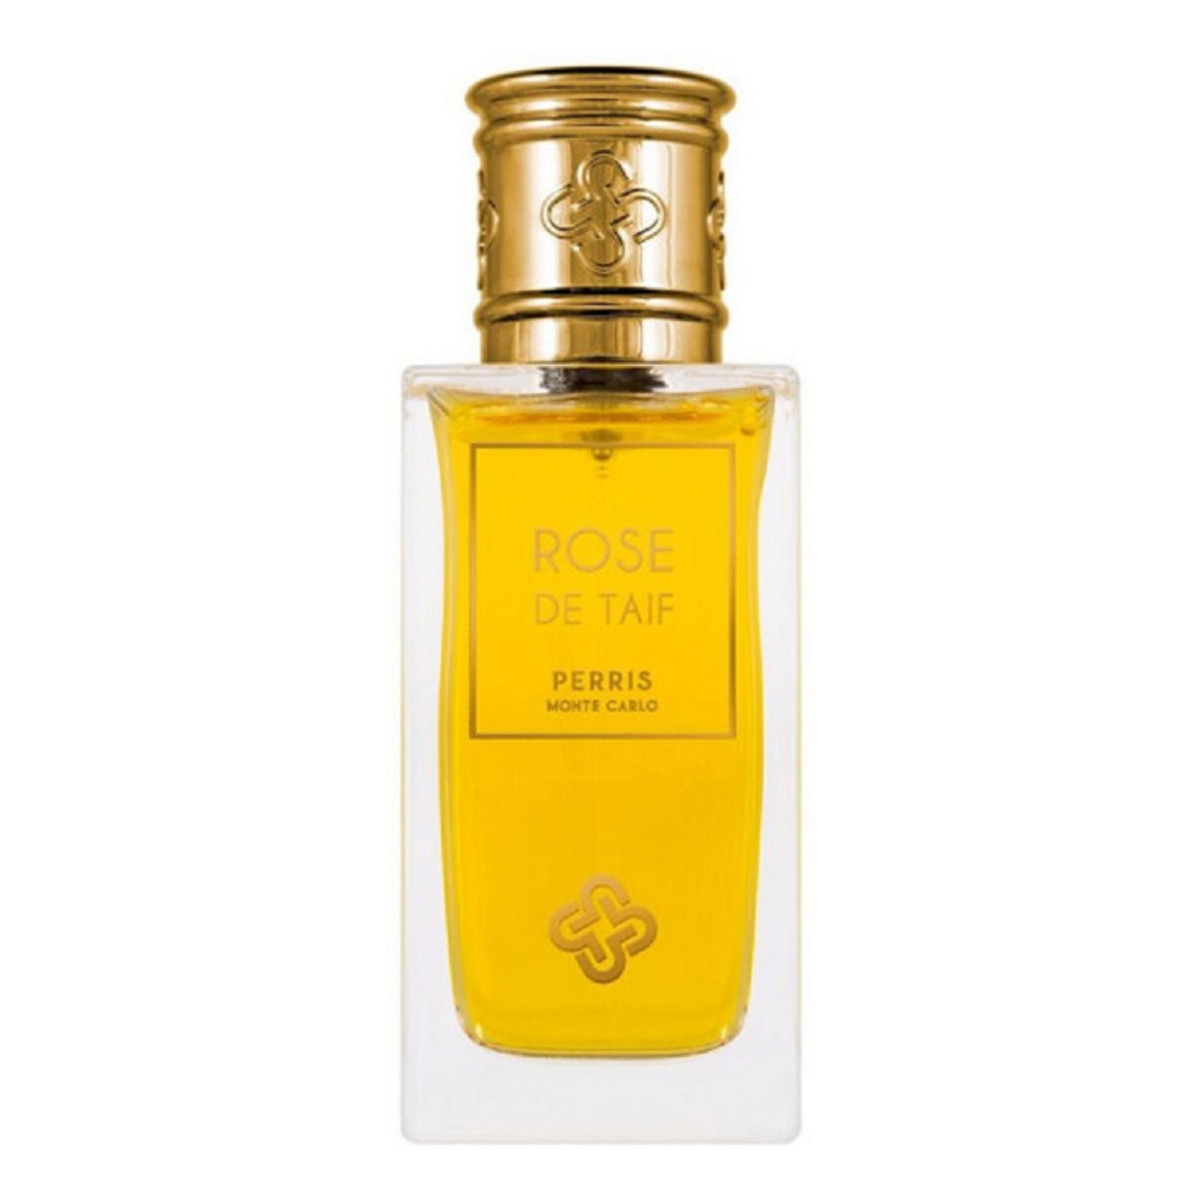 Perris Monte Carlo Rose de Taif Unisex woda perfumowana Tester 50ml